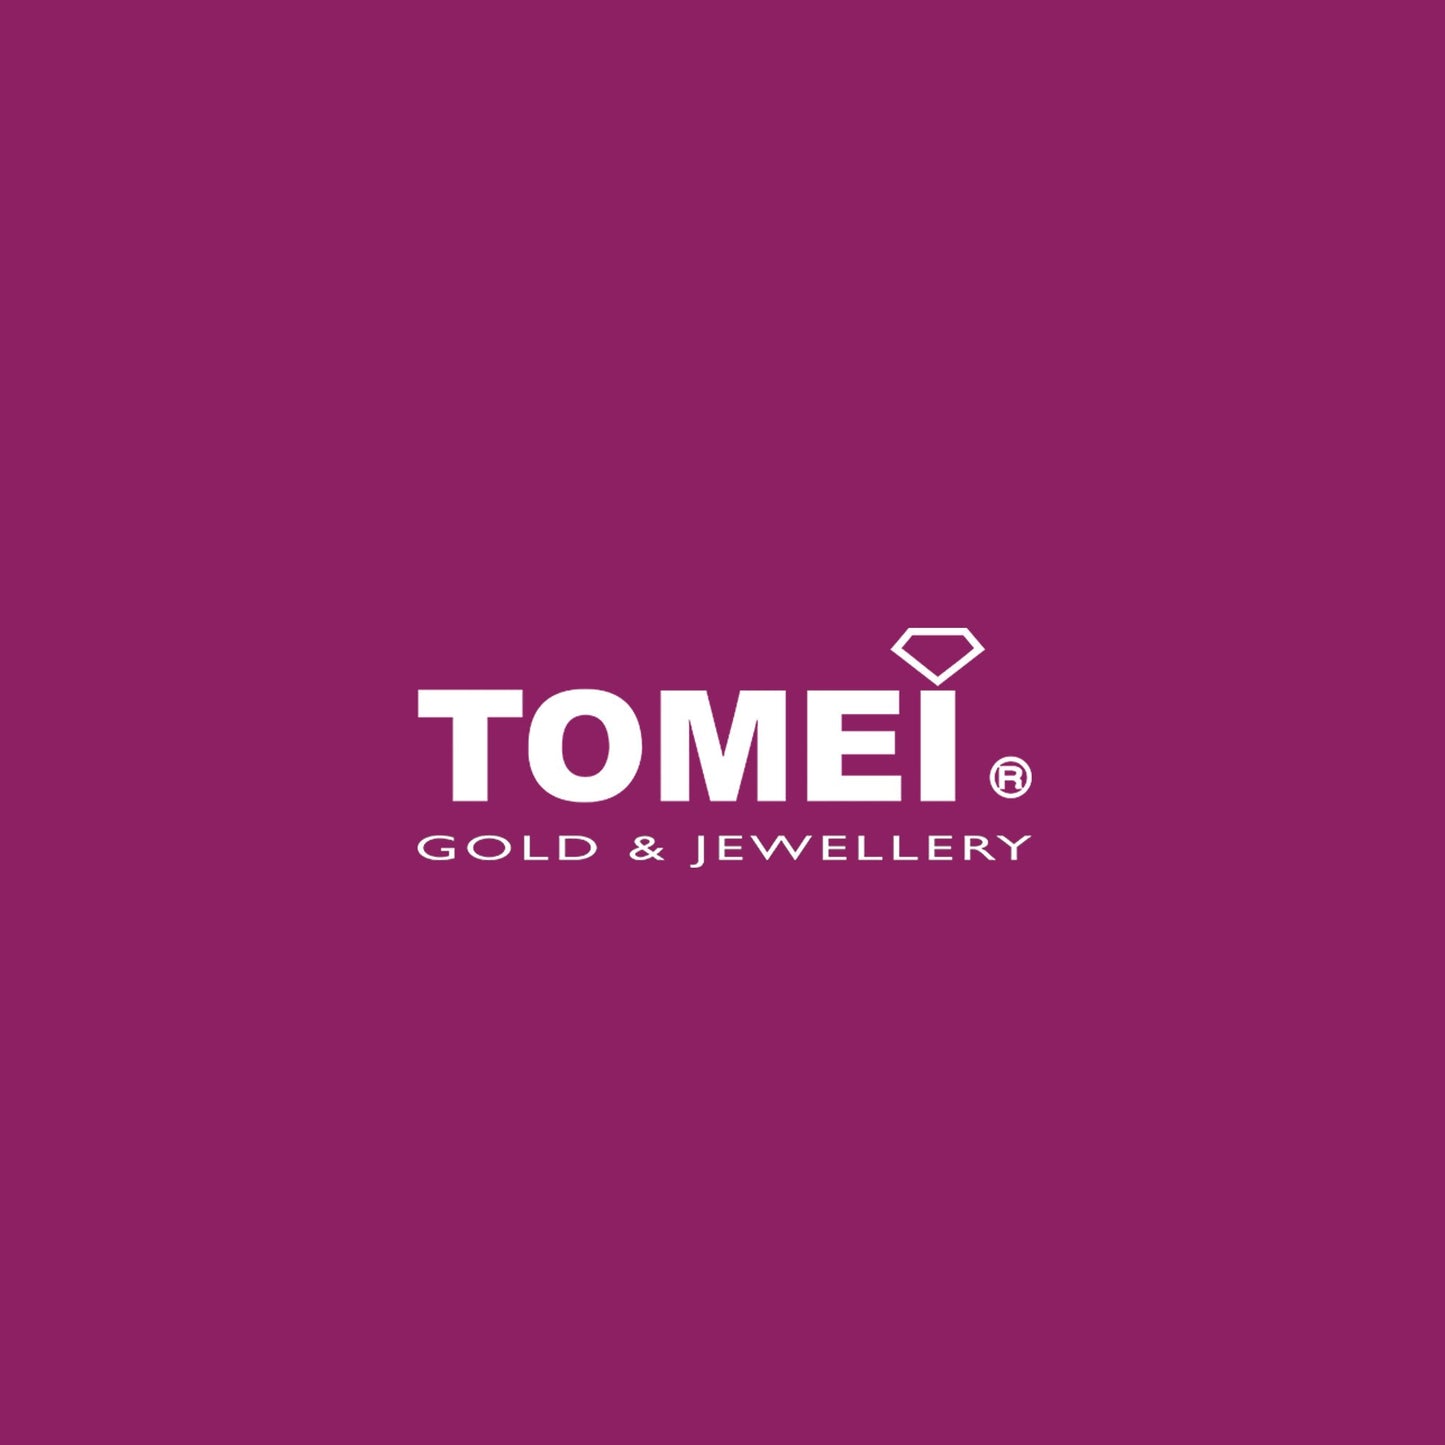 TOMEI Dual-Tone Ice Skate Shoe Charm, Yellow Gold 916